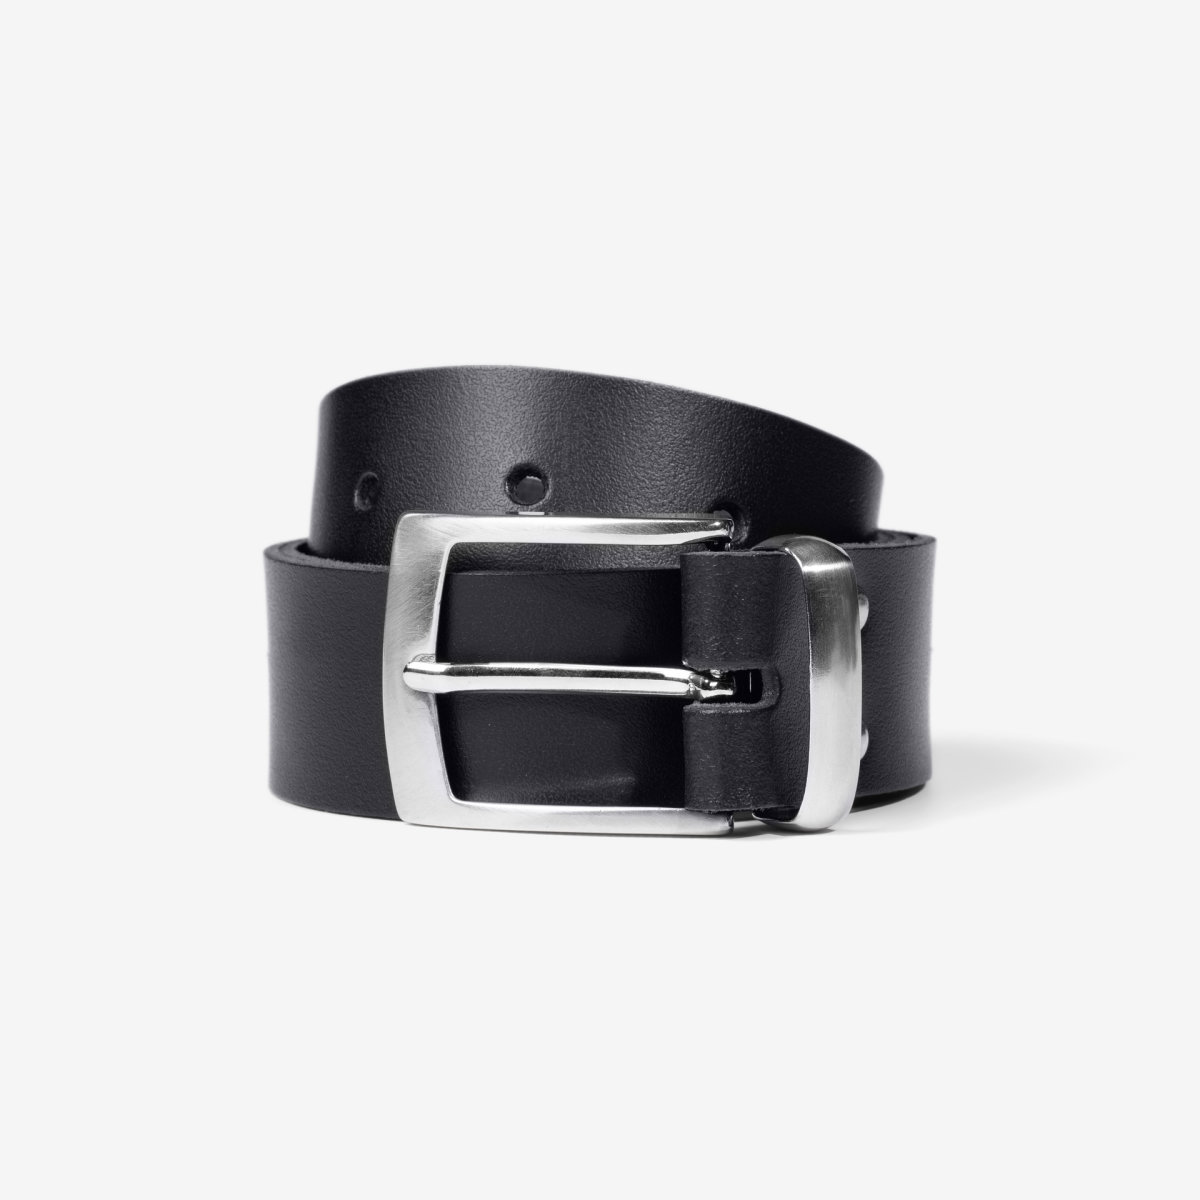 FHB Lederg&uuml;rtel 85002 BURKHARD Fb. schwarz G&uuml;rtel 40mm Hoseng&uuml;rtel leather belt